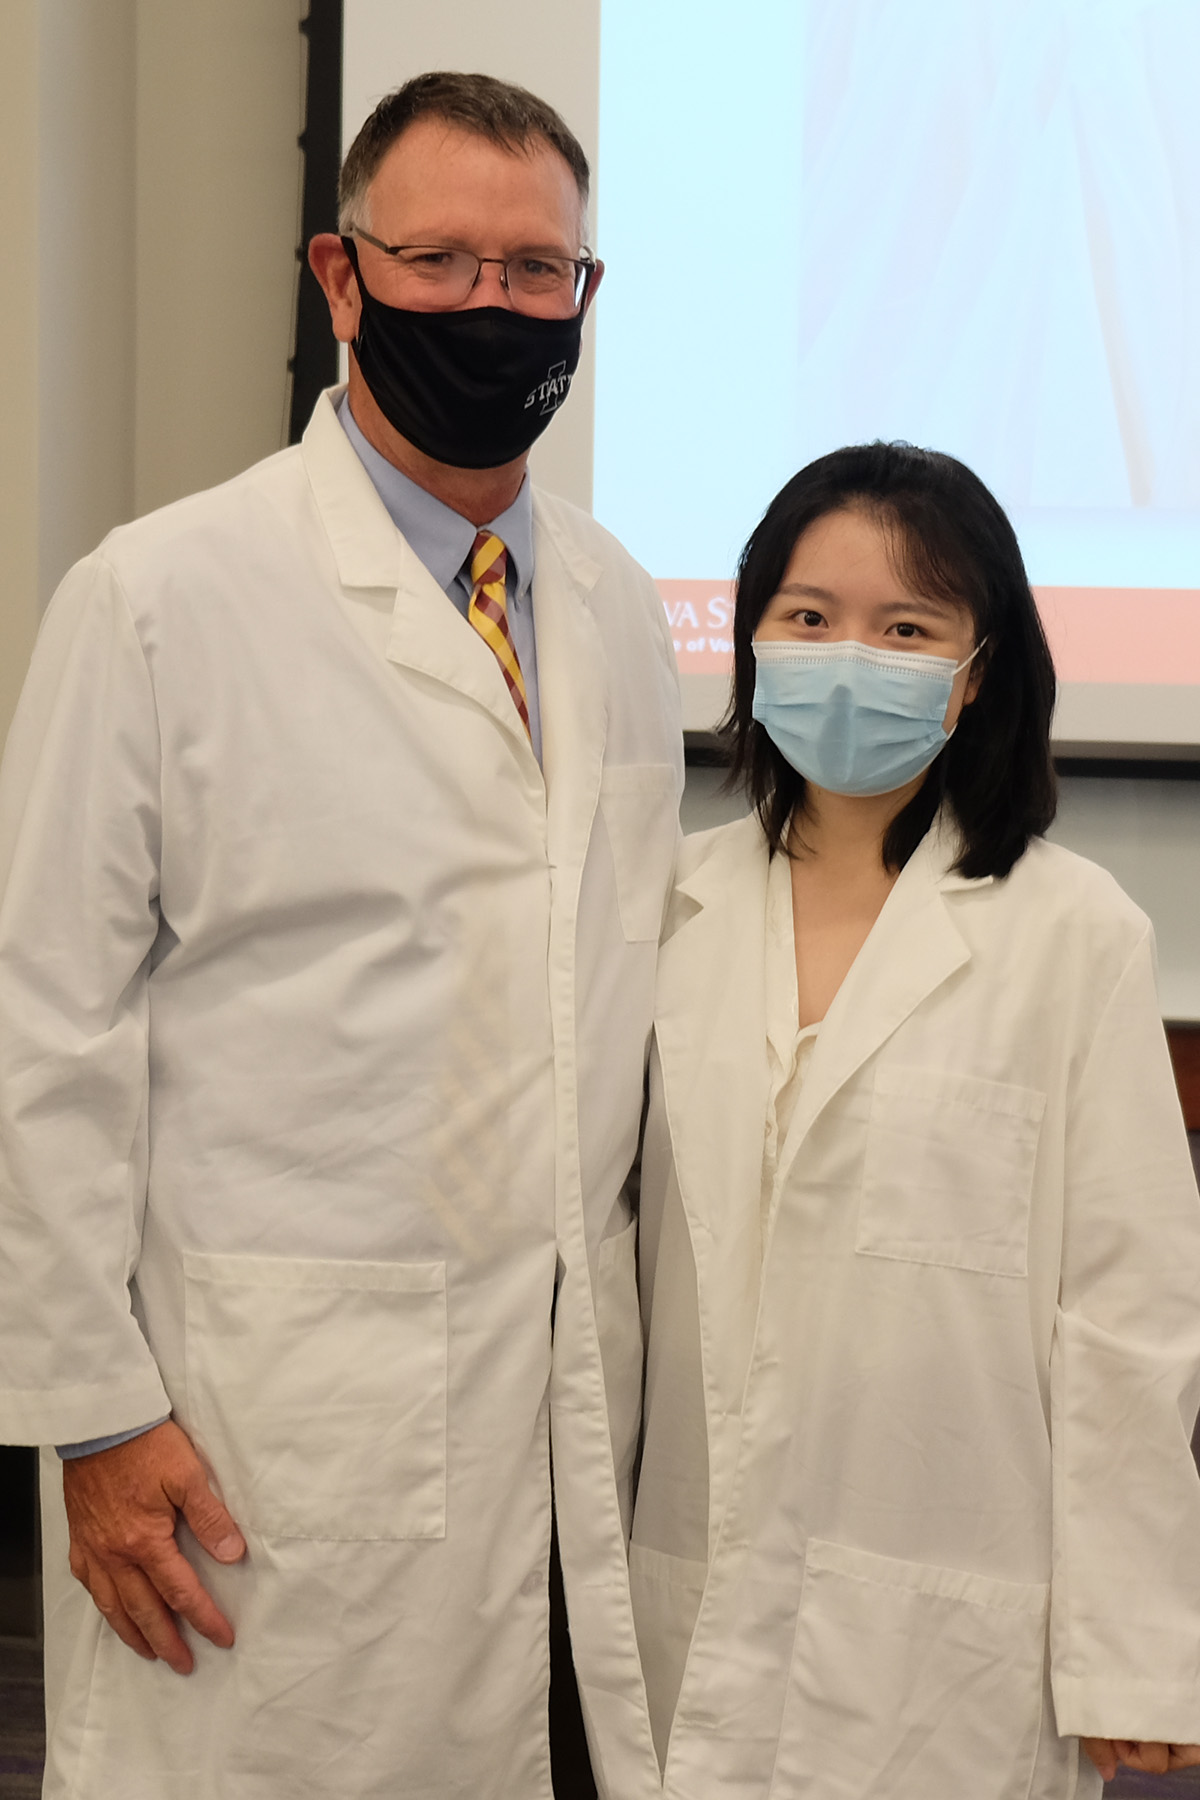 Dr. Daniel Grooms and Xingyi Tang